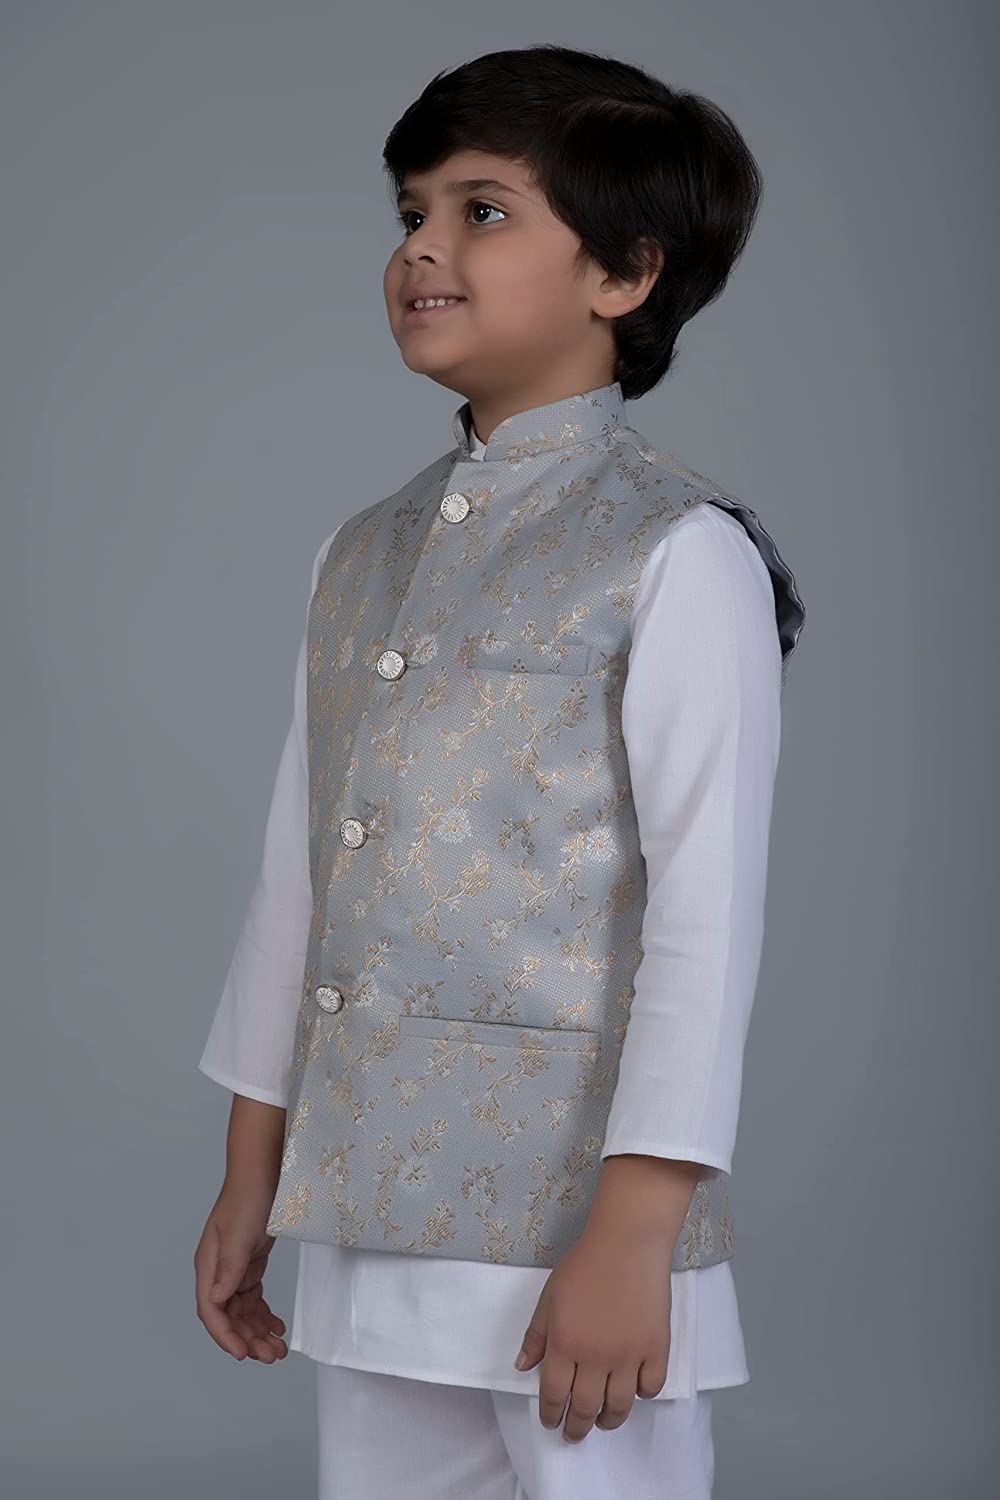 Vastraa Fusion Boys Printed Cotton Nehru Jacket, Round Collar, Ethnic Wear Jacket